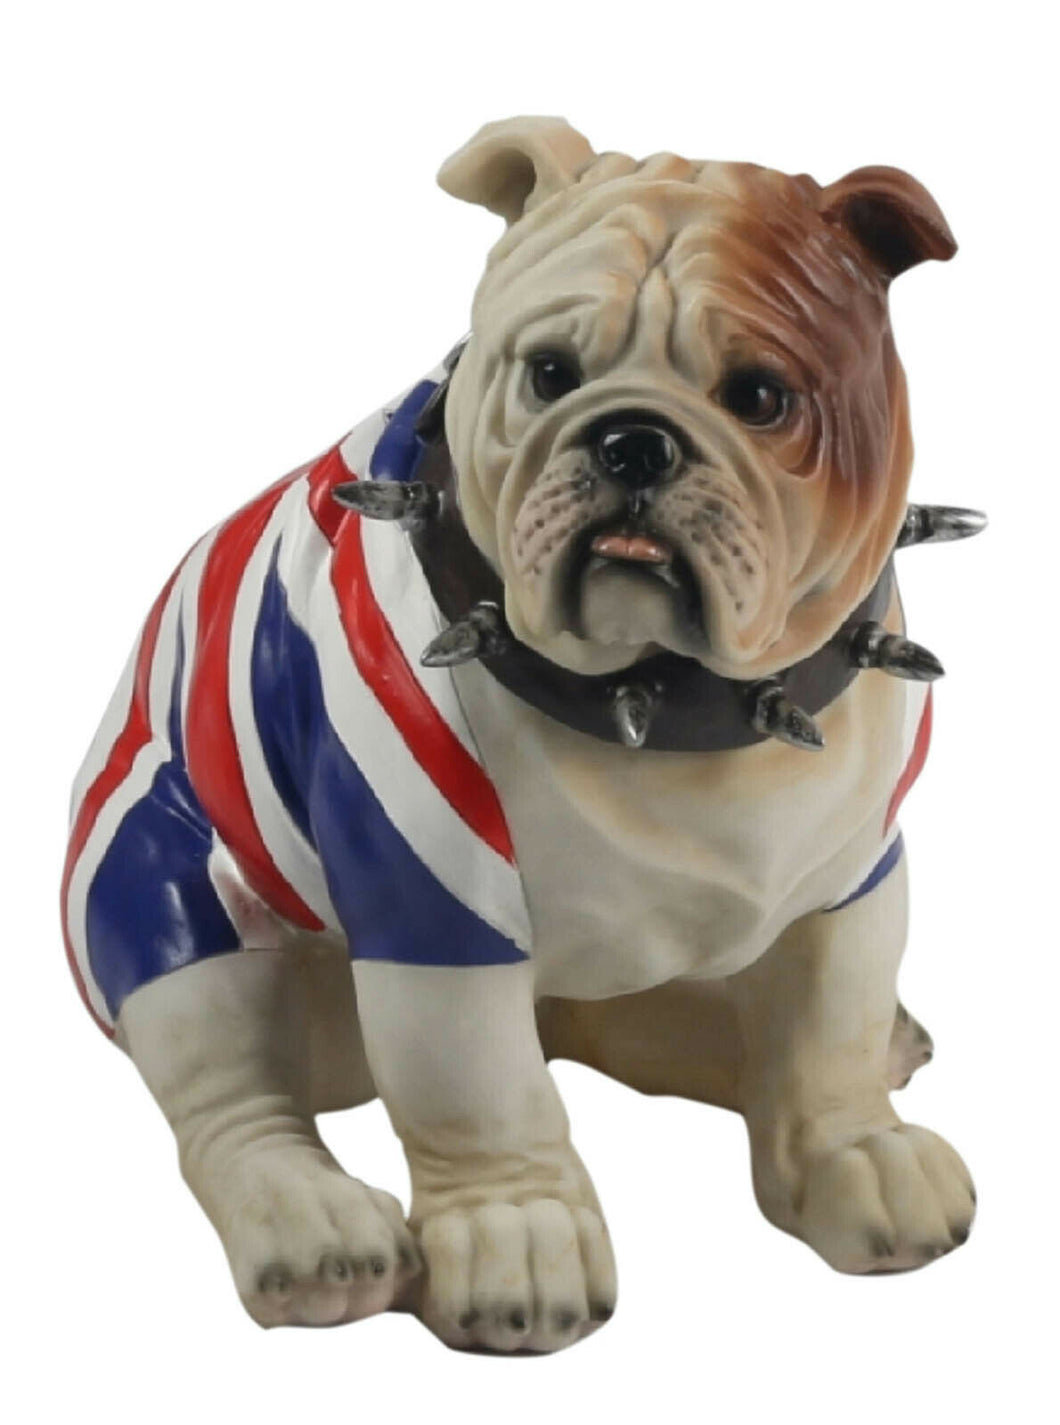 British Bulldog Union Jack Flag Spiked Collar Sitting Ornament